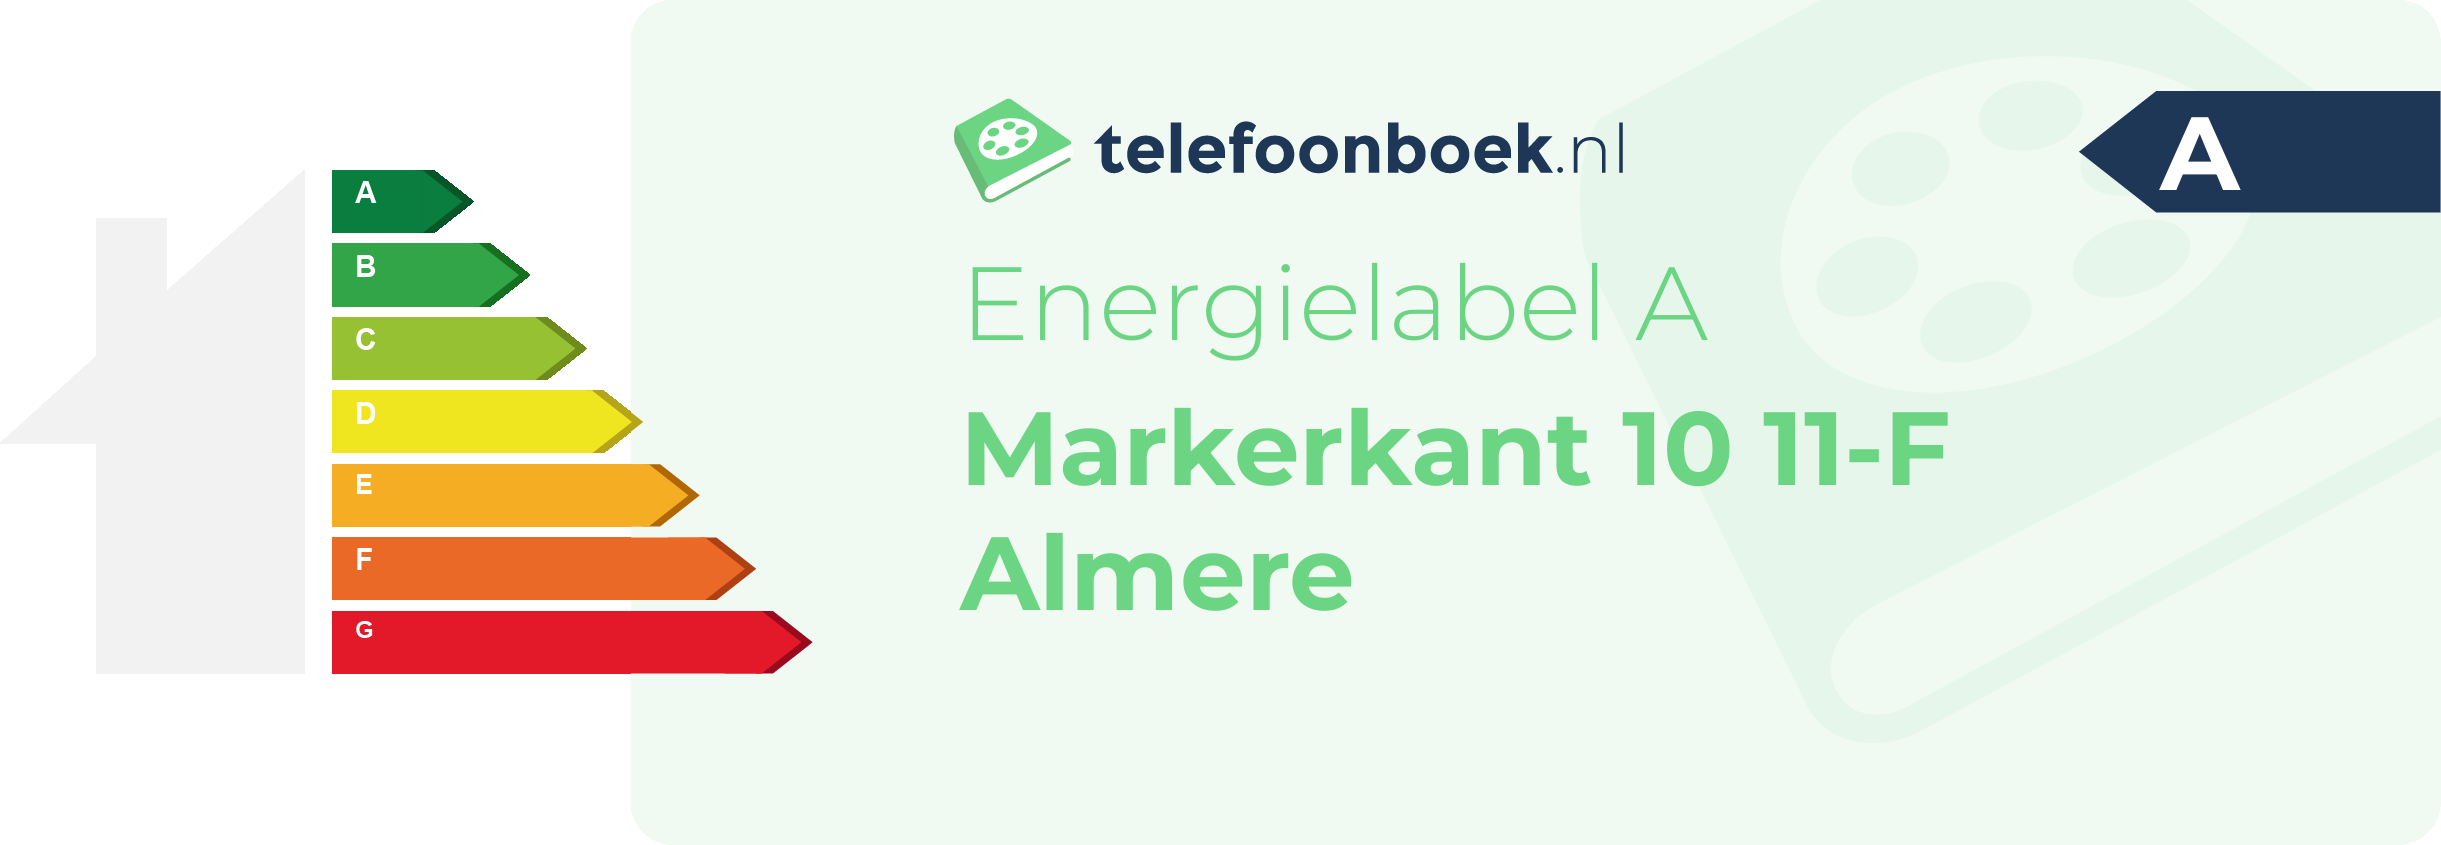 Energielabel Markerkant 10 11-F Almere